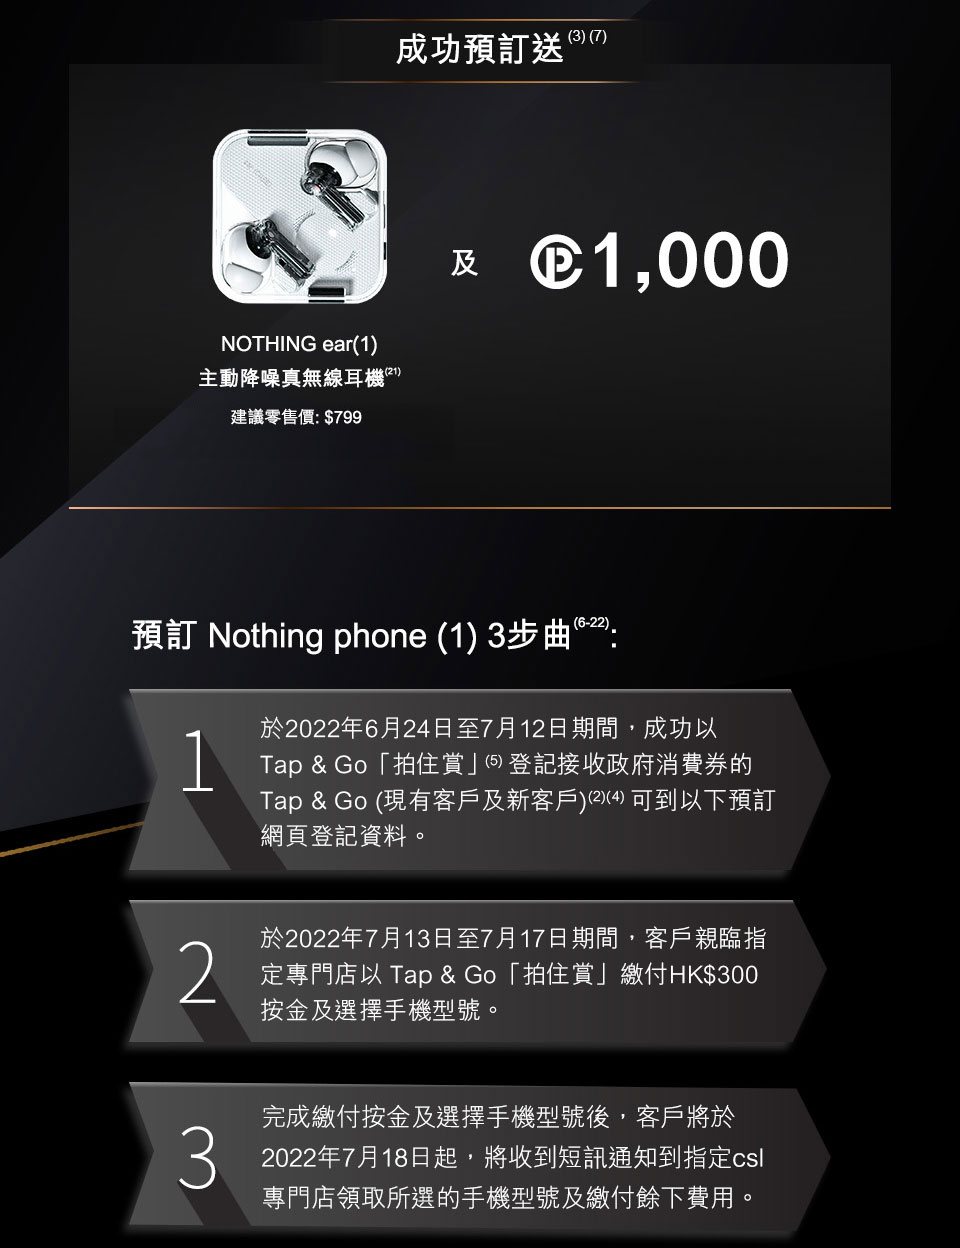 Nothing phone (1)